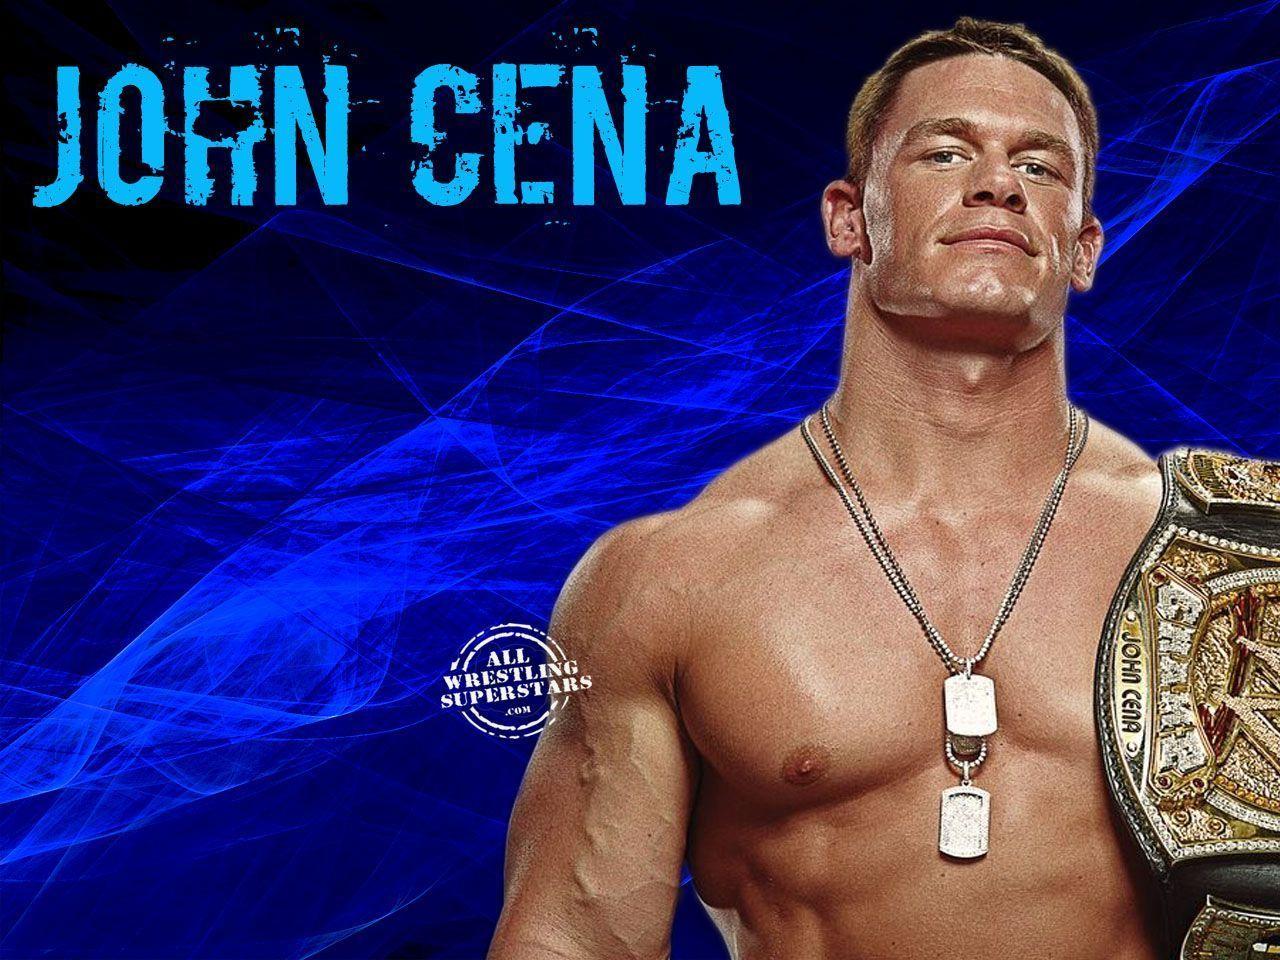 John Cena An American Professional Wrestler And WWE Superstars